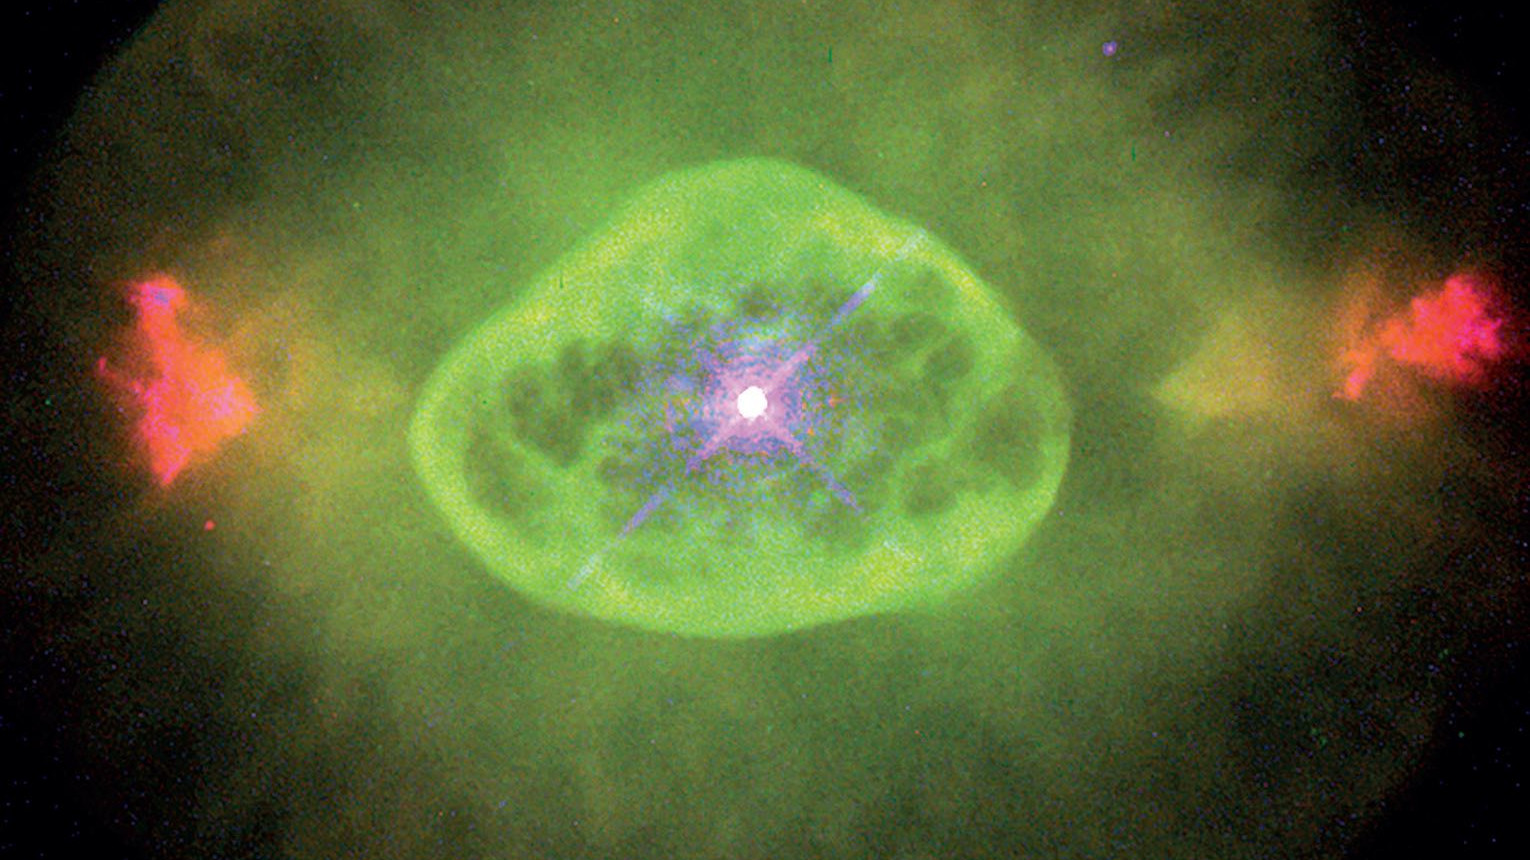 Mrugająca mgławica planatarna NGC 6826 okiem Hubble'a. B. Balick (University of Washington), J. Alexander (University of Washington), A. Hajian (U.S. Naval Observatory), Y. Terzian (Cornell University). M. Perinotto (Universität Florenz), P. Patriarchi (Arcetri-Observatiorium) oraz NASA/ESA